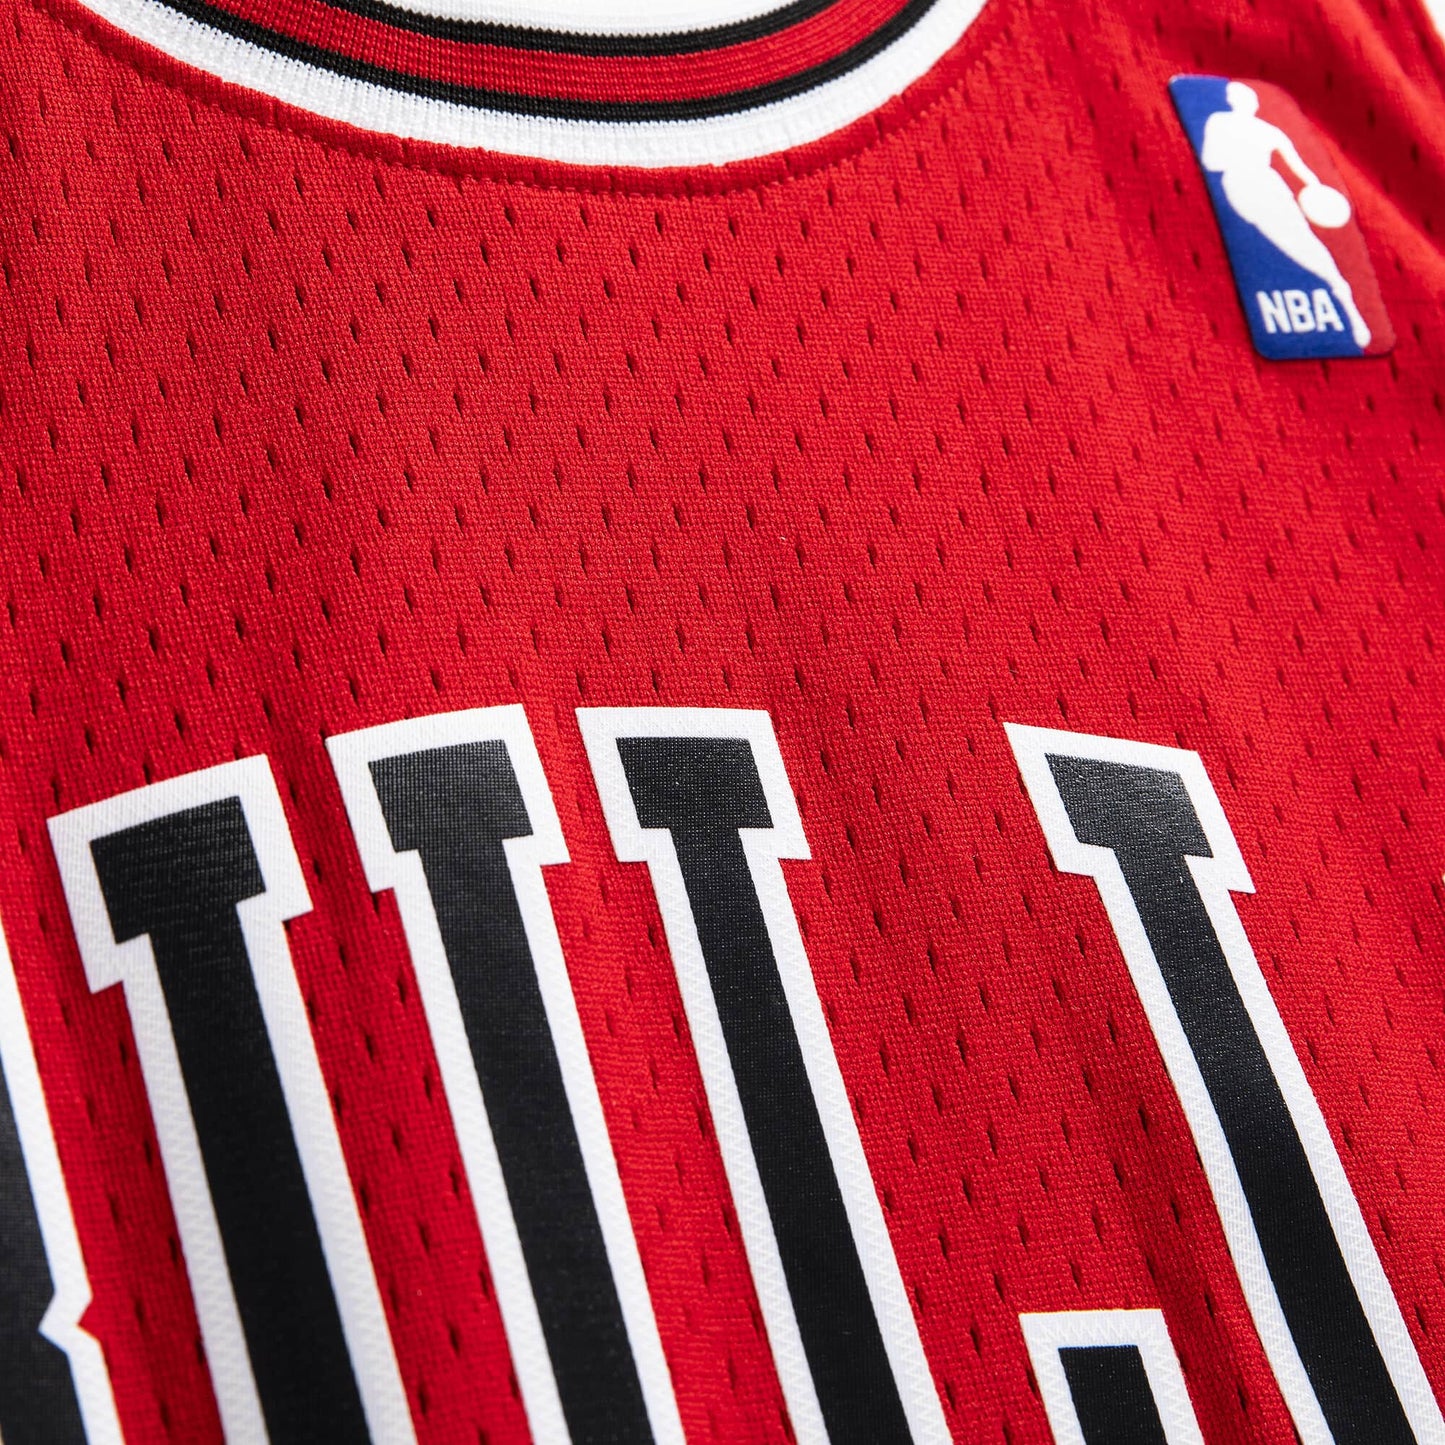 NBA Swingman Jersey Chicago Bulls 1997-98 Toni Kukoc